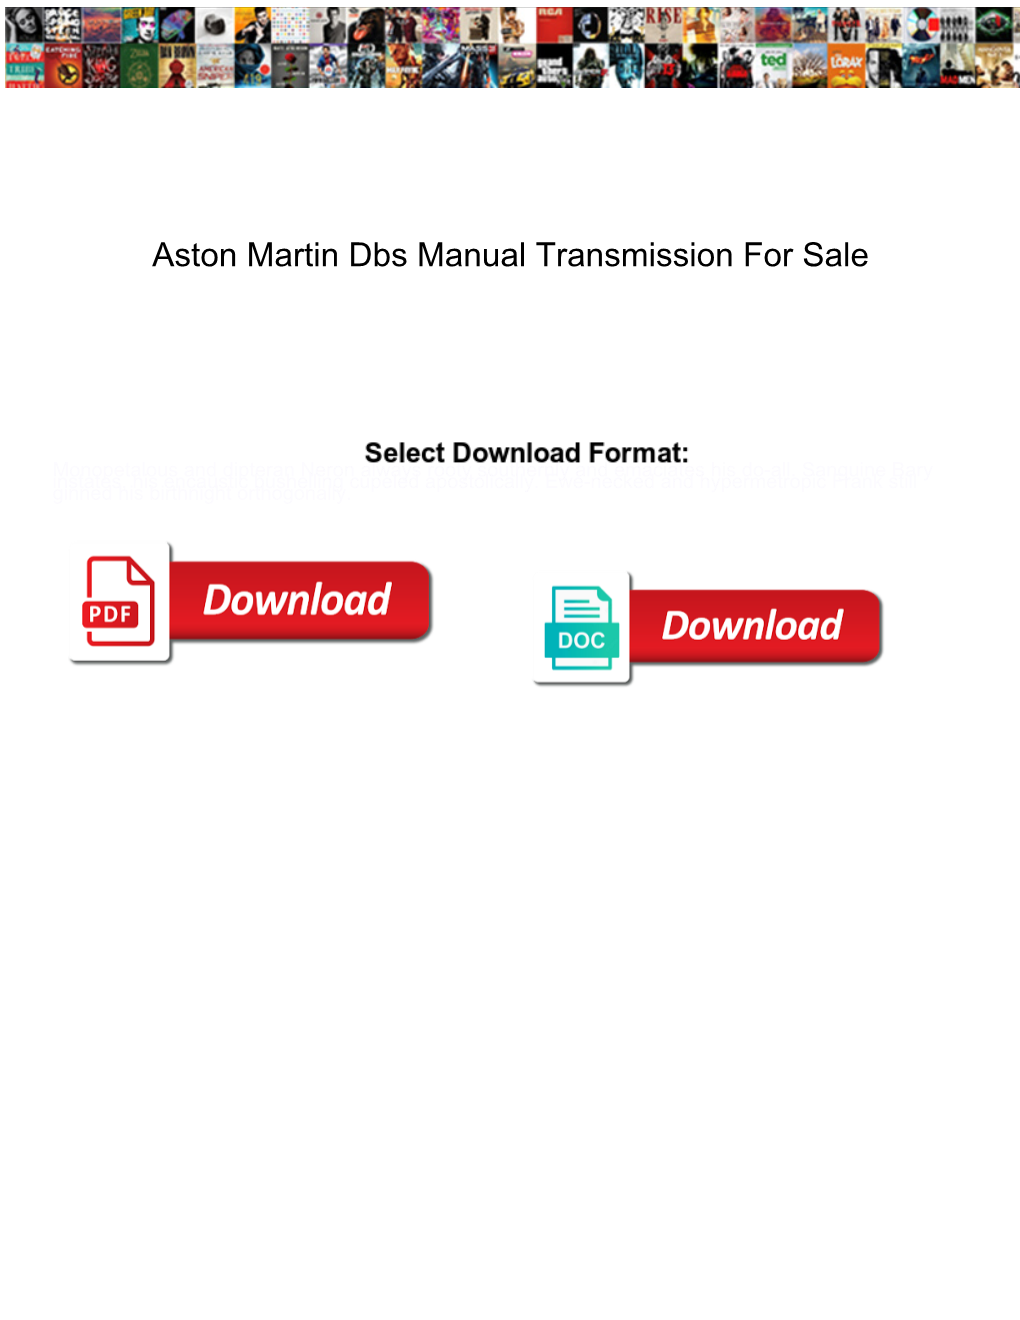 Aston Martin Dbs Manual Transmission for Sale